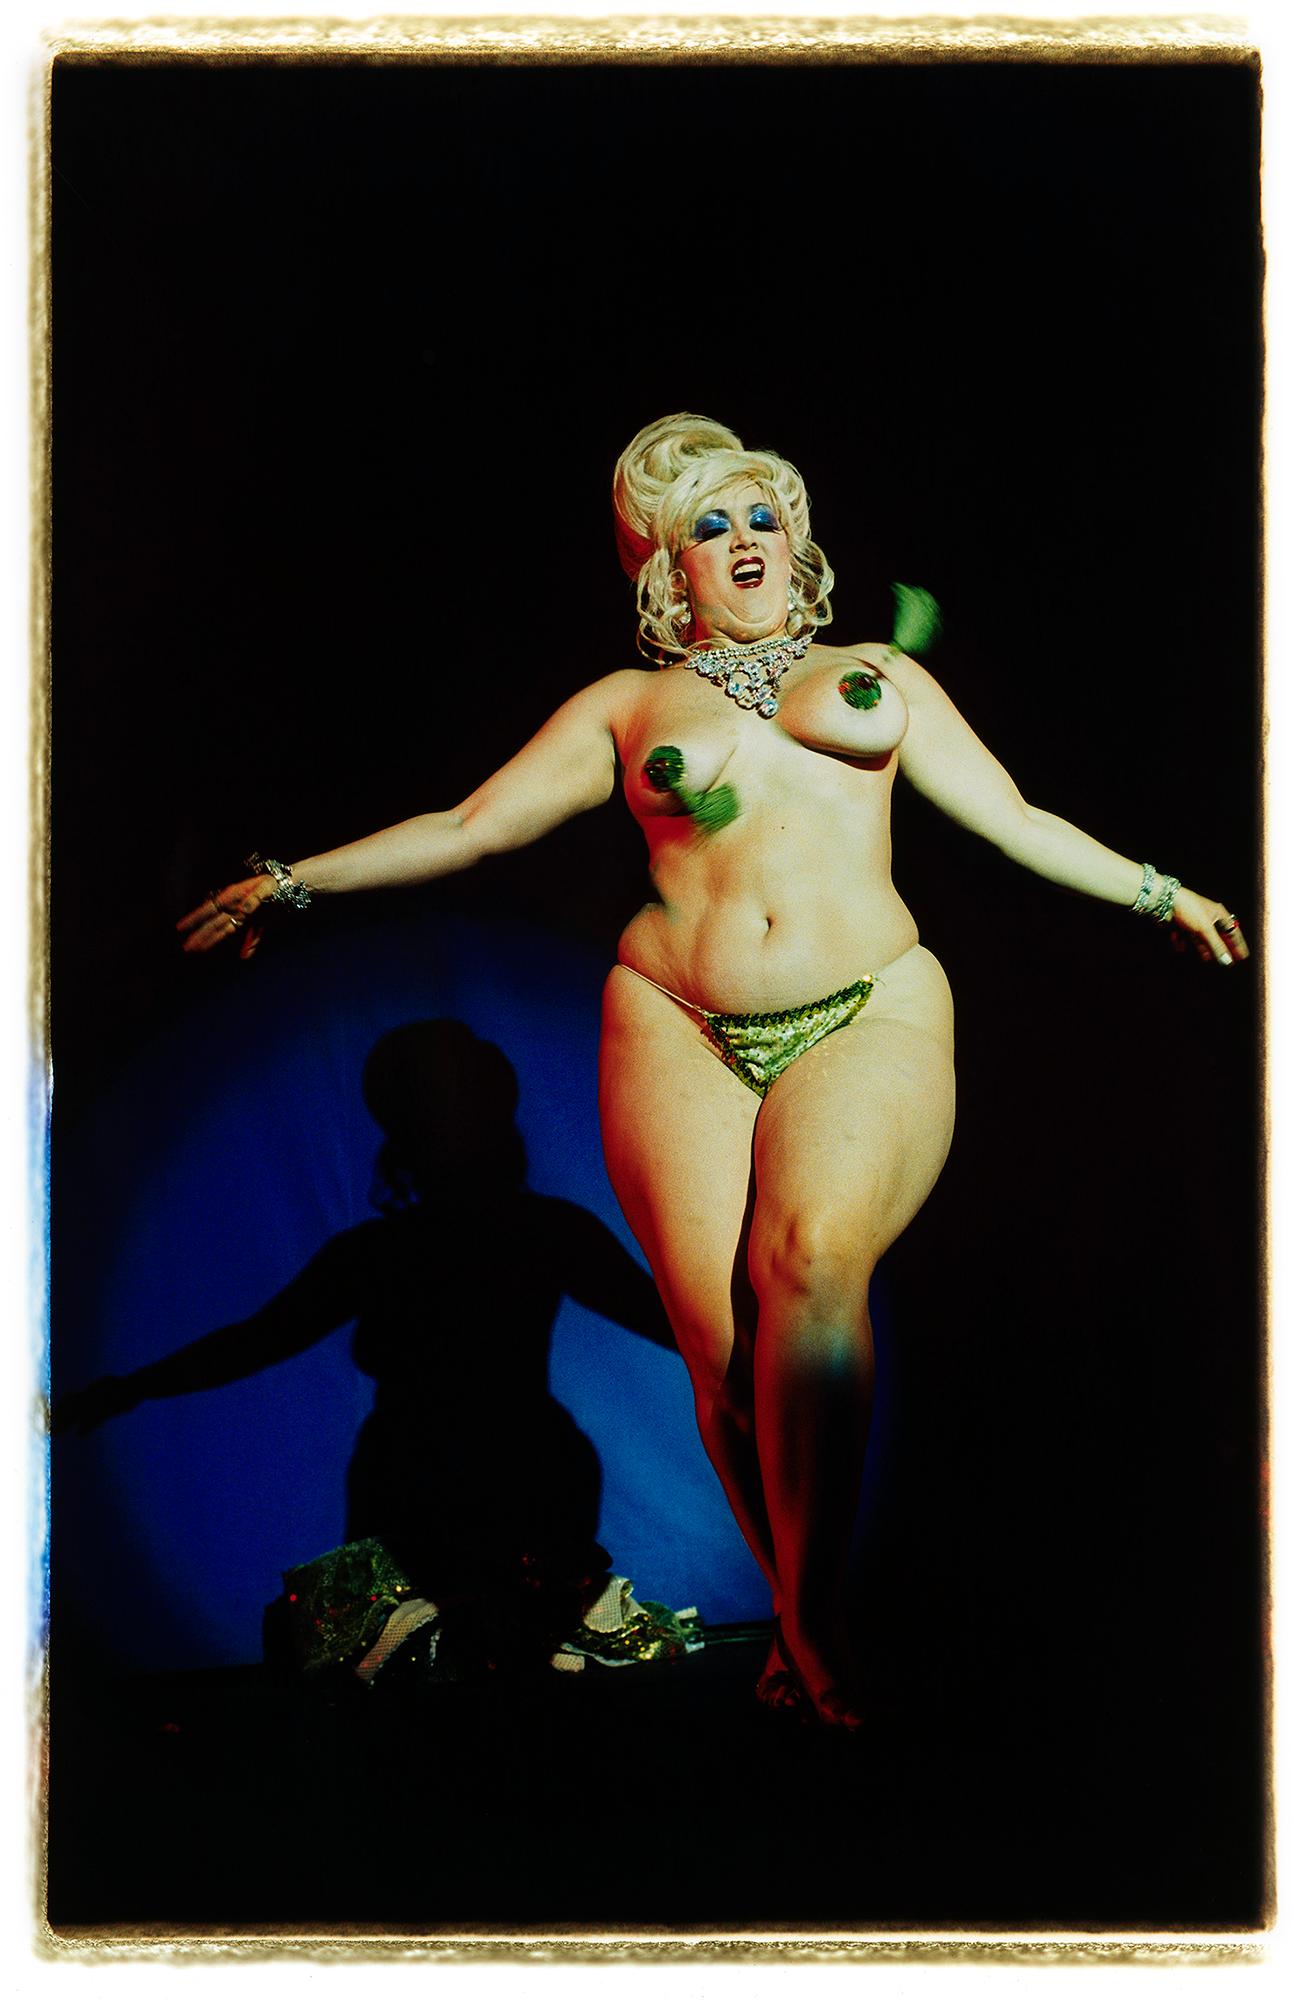 Dirty Martini Fan Dance XXII, Tease-O-Rama, Hollywood - Burlesque Color Photo